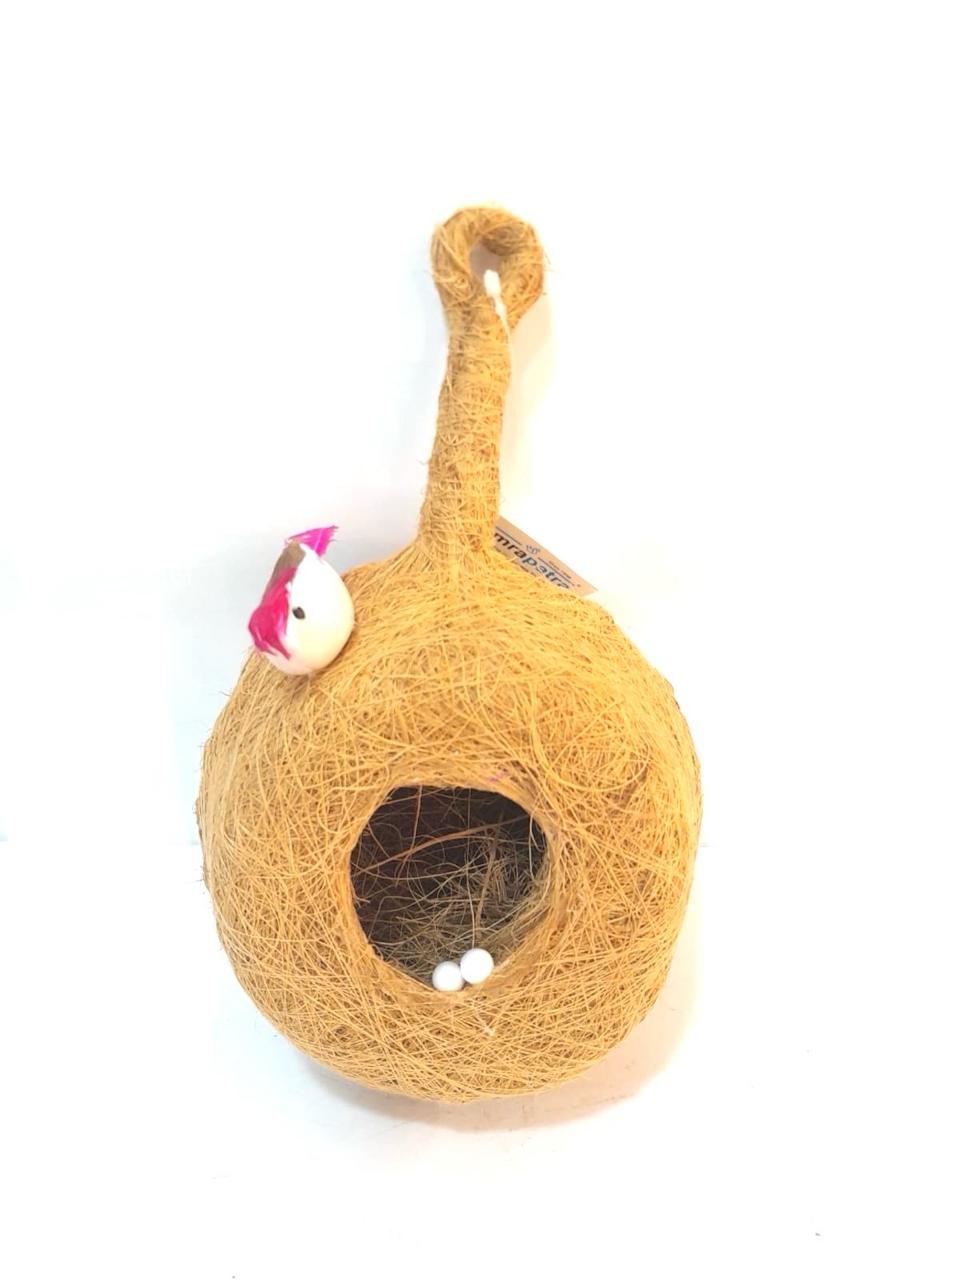 Big Weaver Bird Nest Excellent Natural Coir Eco Friendly Decoration By Tamrapatra